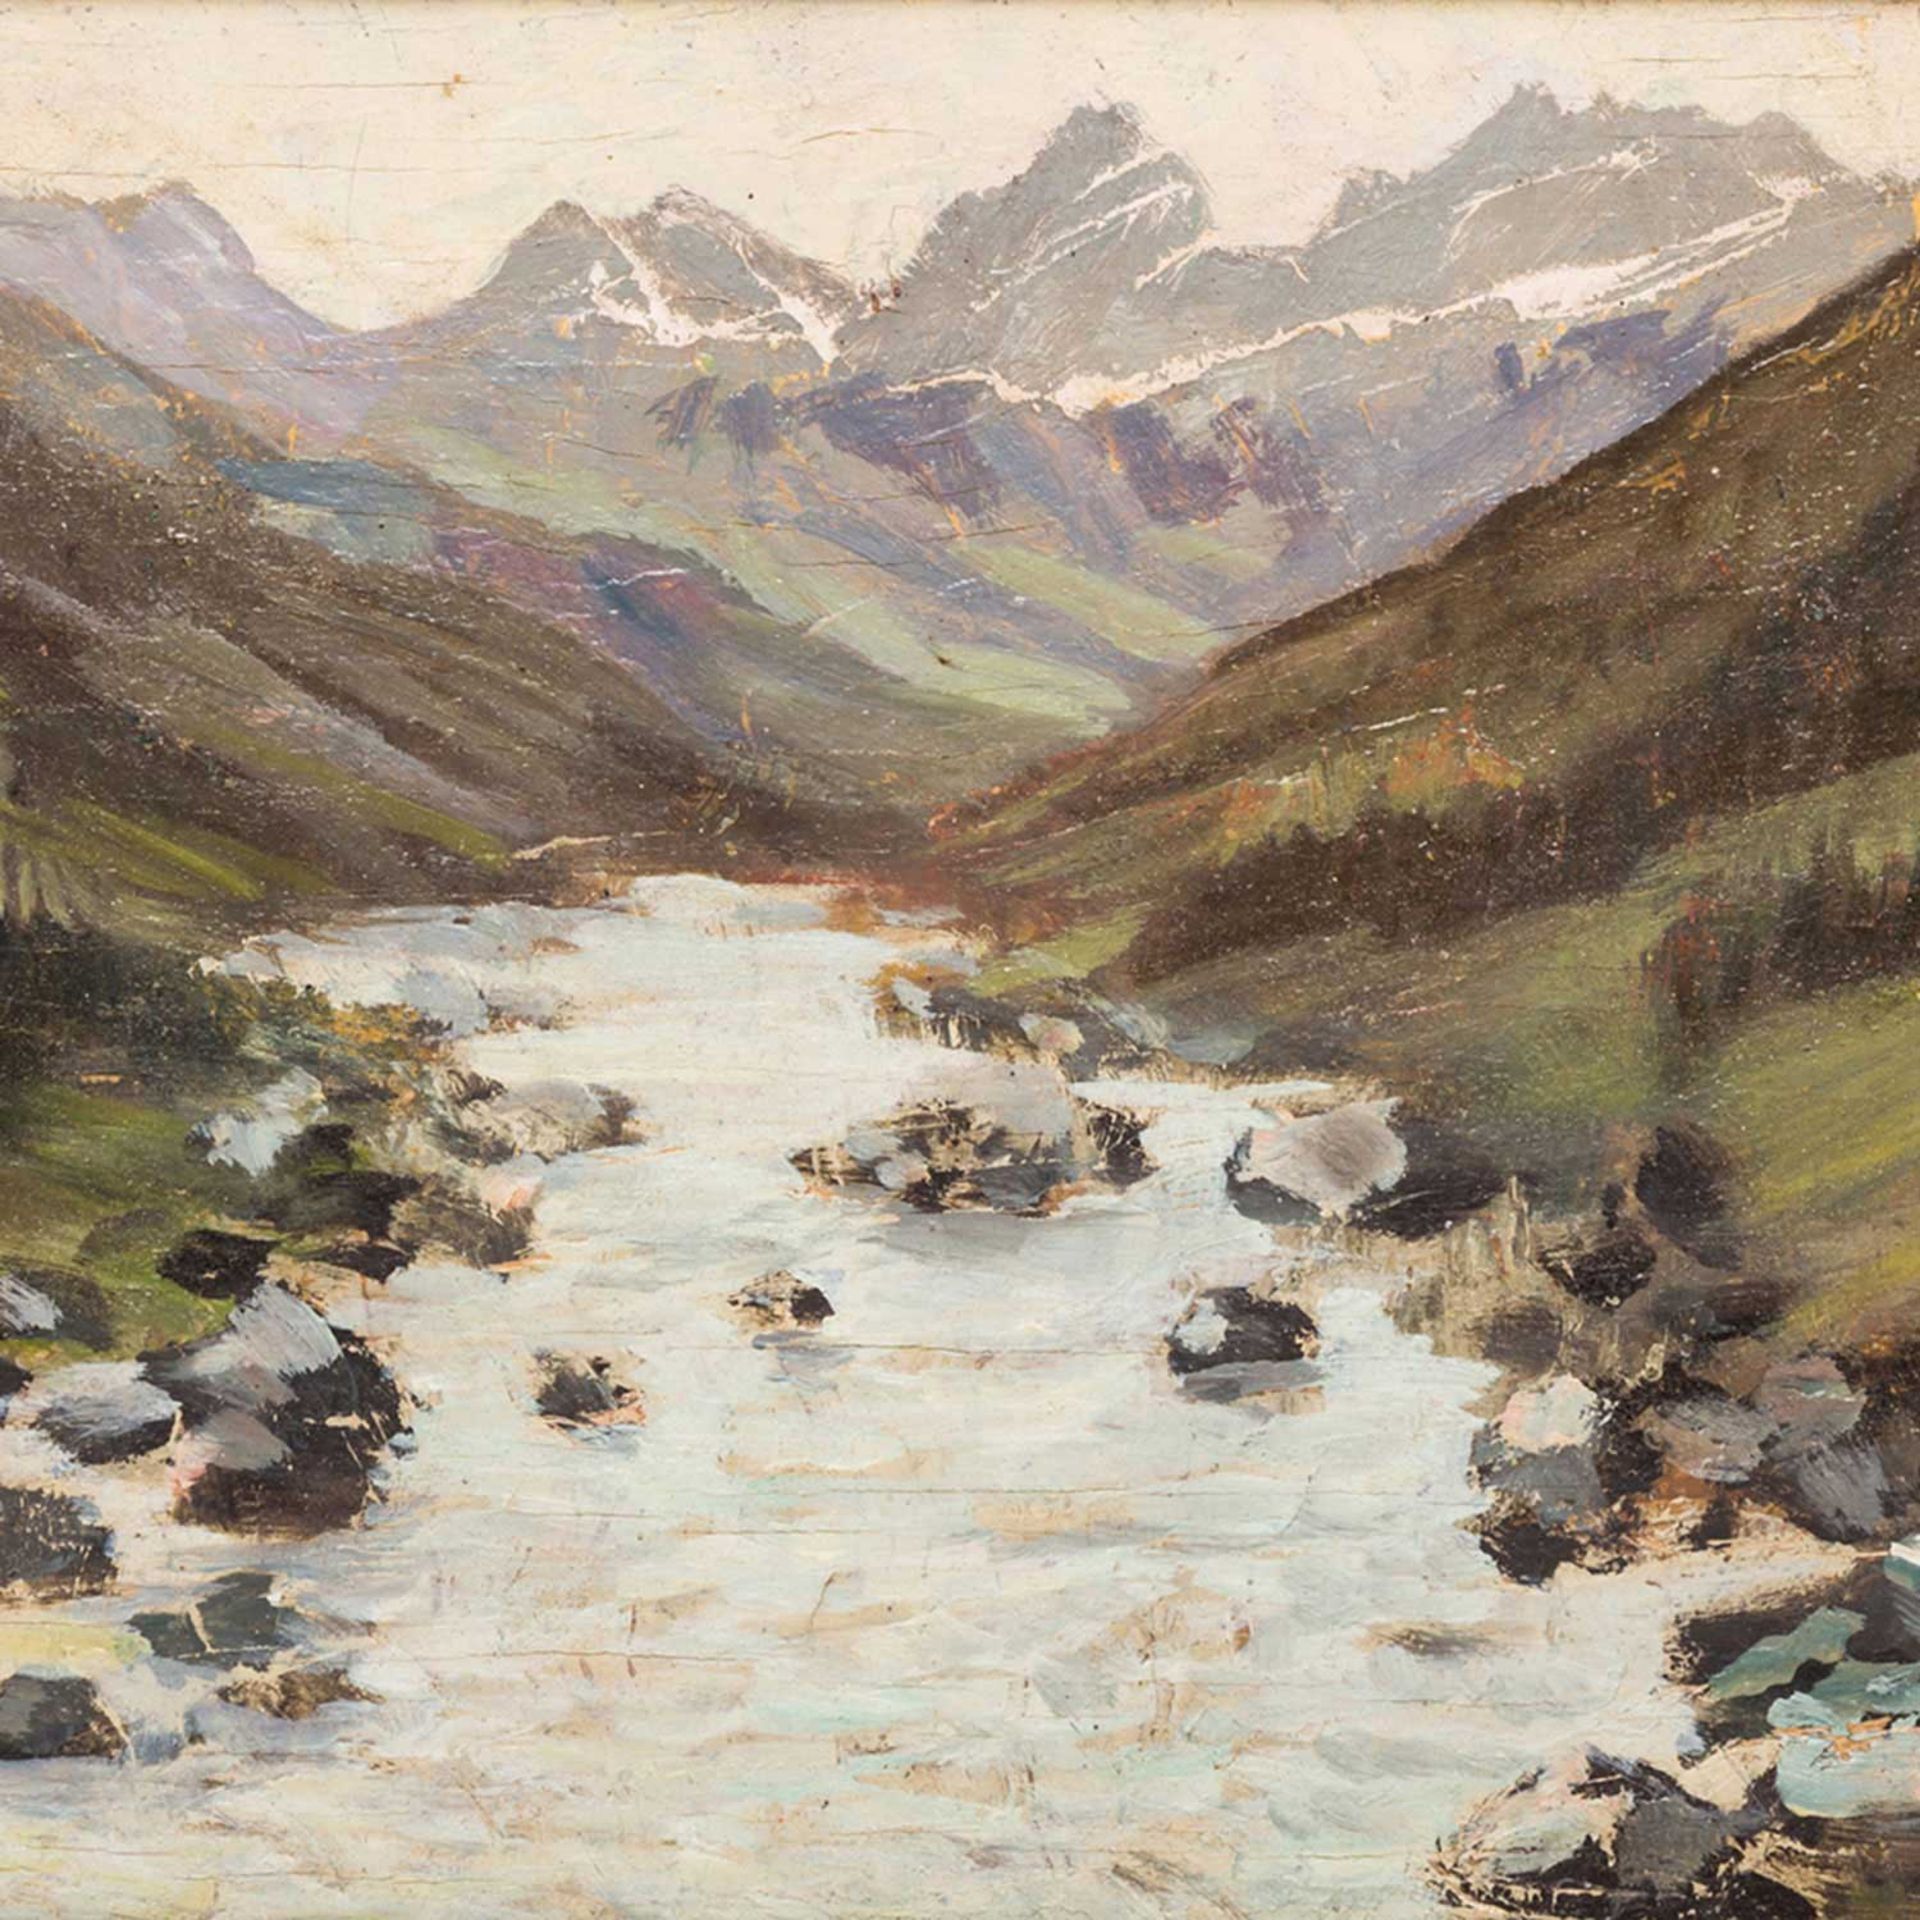 SCHRIMPF, R. (süddeutscher Maler 20. Jh., tätig in Stuttgart), "Fluss in den Alpen", u.li. sign., Öl